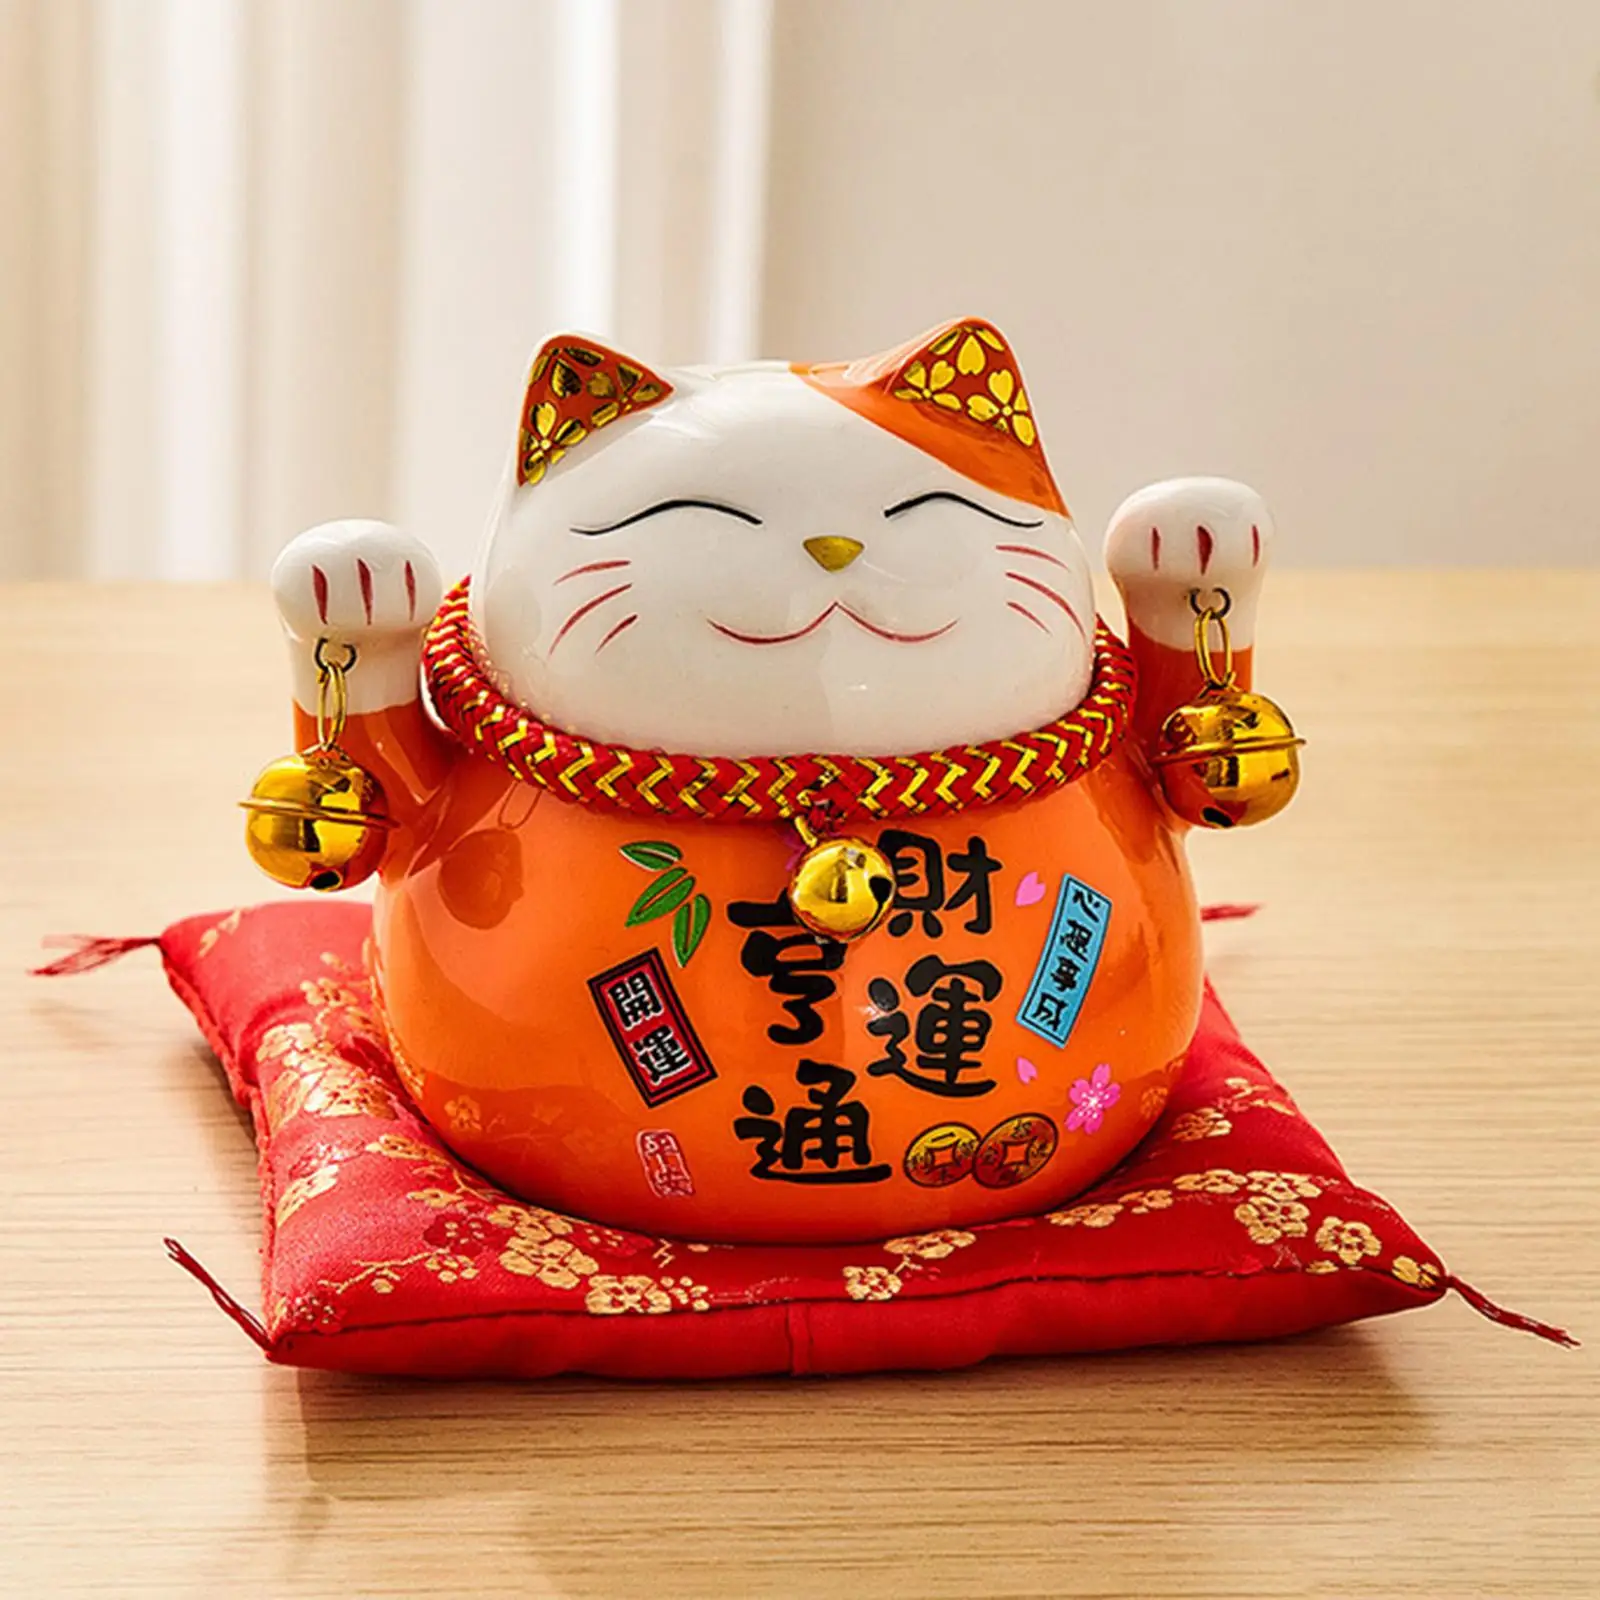 Cute Maneki Neko Good Luck Cat Piggy Bank Ceramic Figurine Blessing Ornament